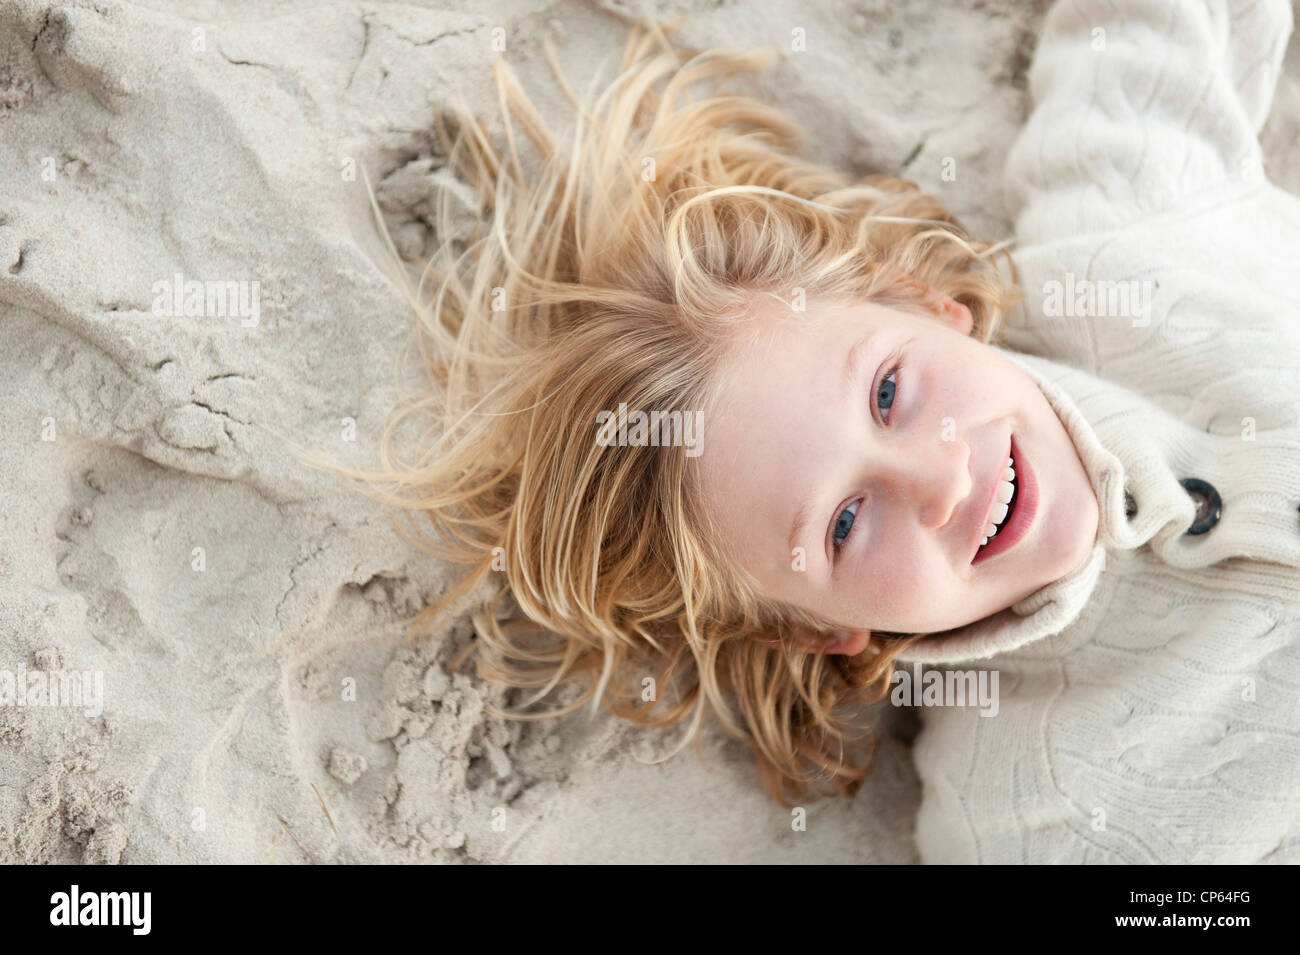 Spain, Mallorca, Boy lying on beach, smiling, portrait Stock Photo